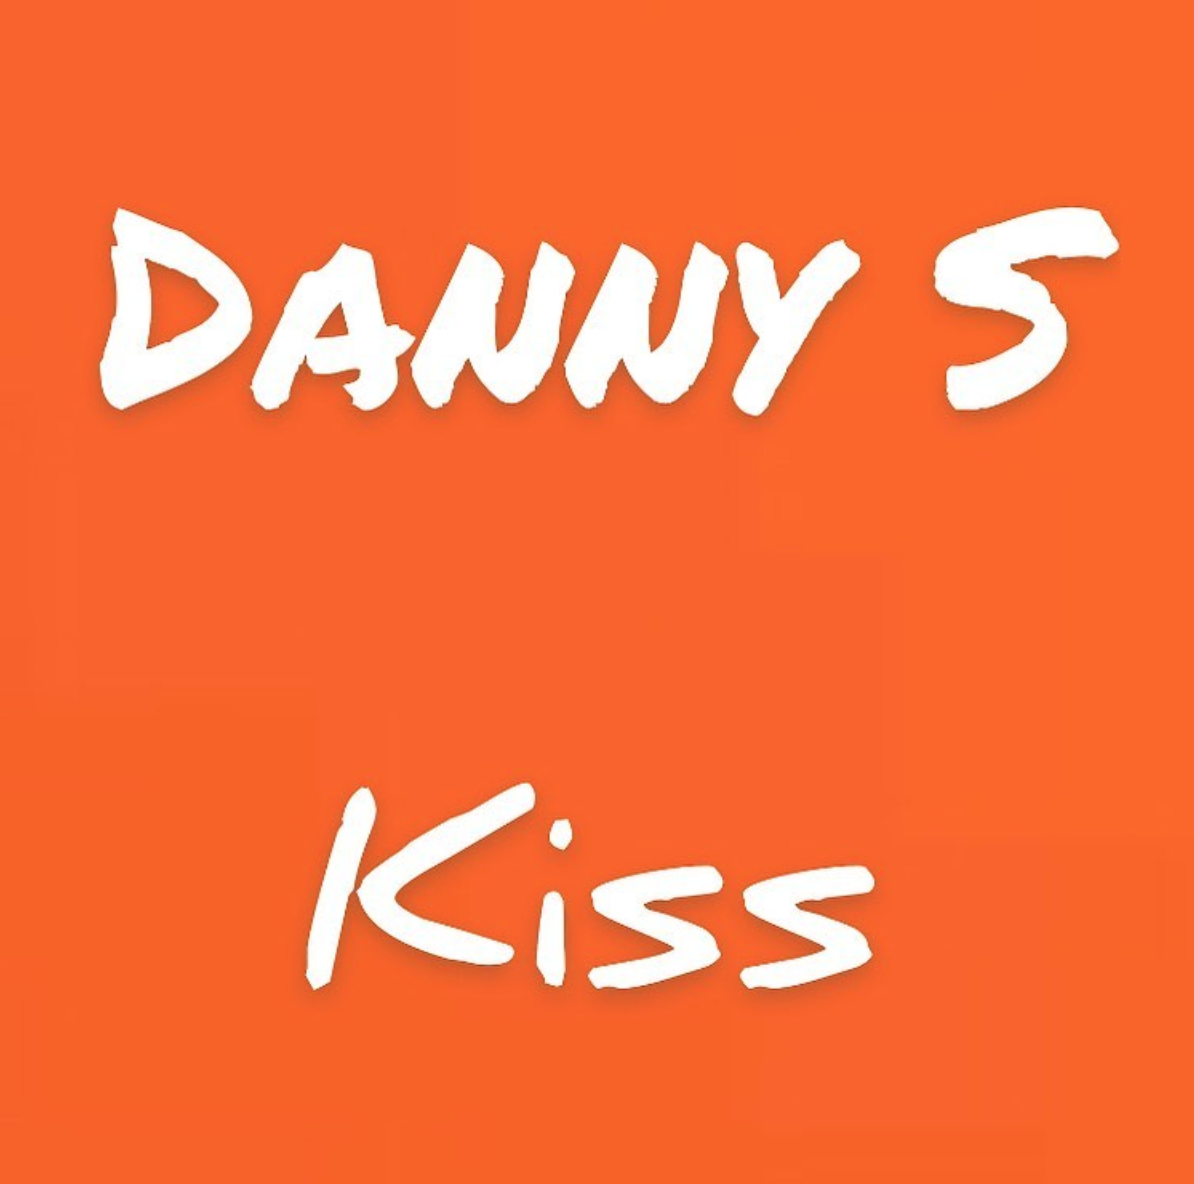 Danny S - Kiss [Audio]